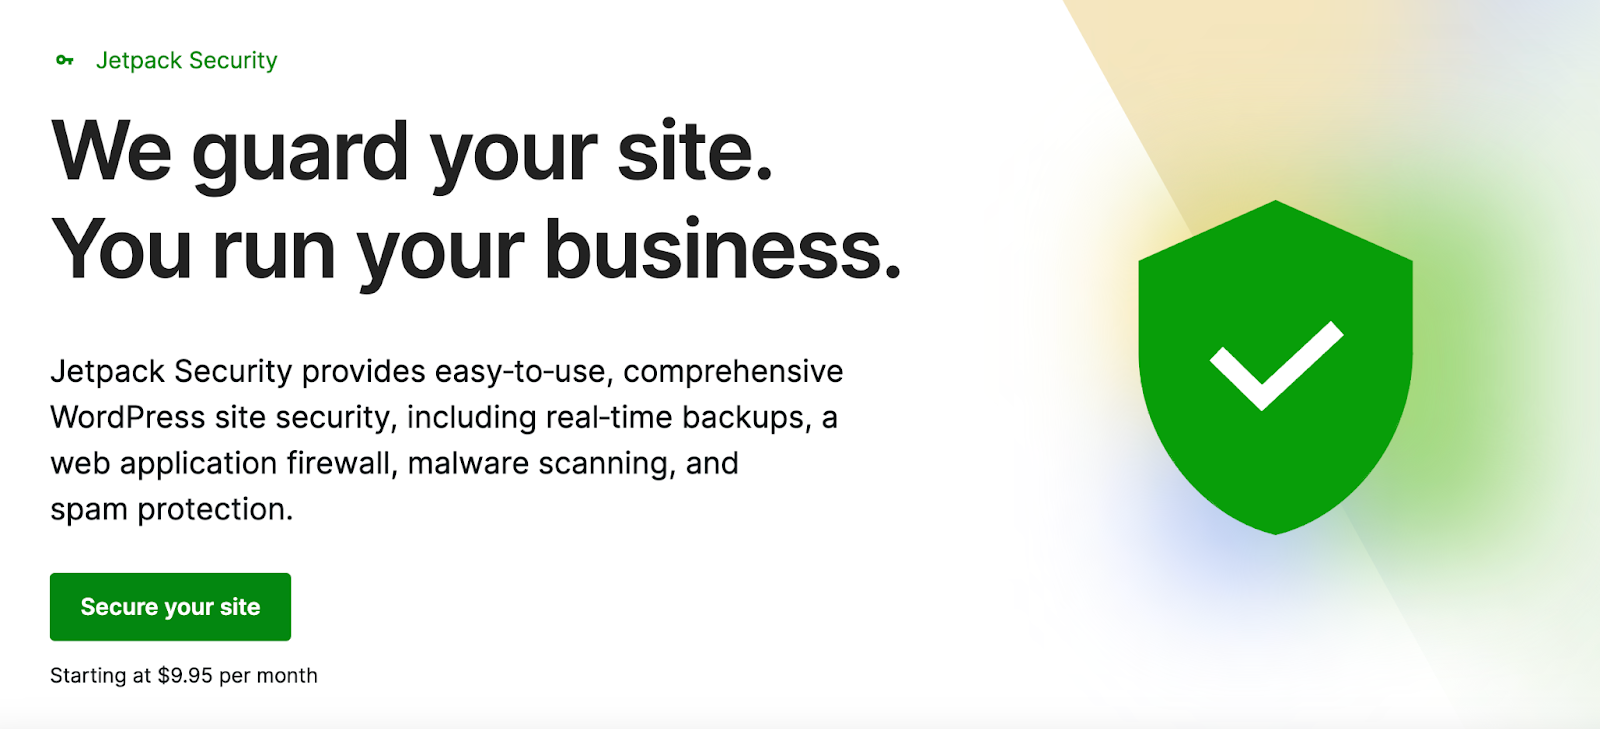 Jetpack Security 为您的 WordPress 网站提供全面的保护，包括实时备份、恶意软件扫描、垃圾邮件防护等。